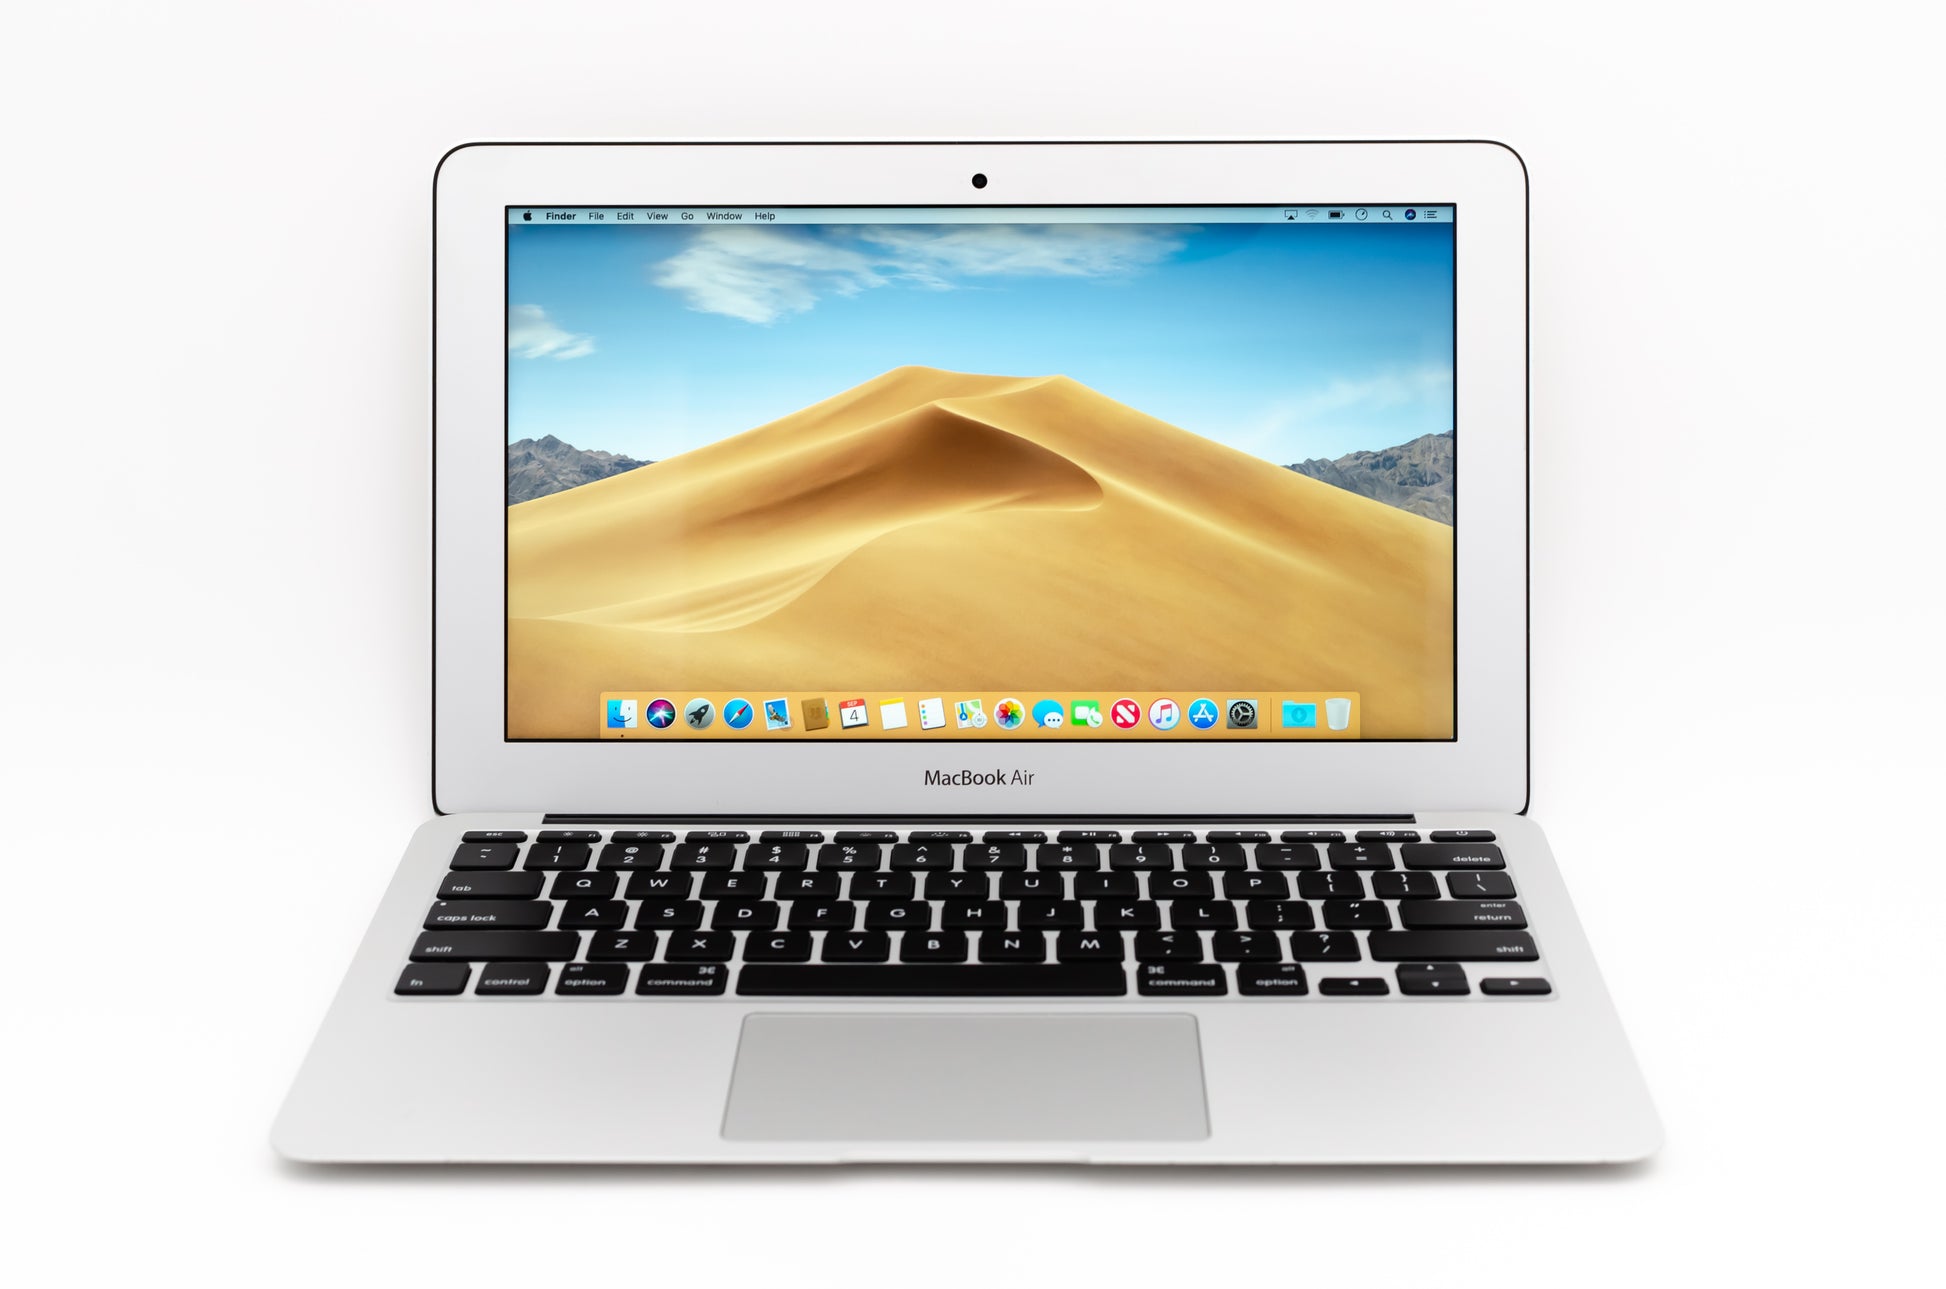 apple-mid-2012-11.6-inch-macbook-air-a1465-aluminum-dci7 - 2ghz processor, 8gb ram, hd 4000 - 512mb gpu-md845ll/a-1